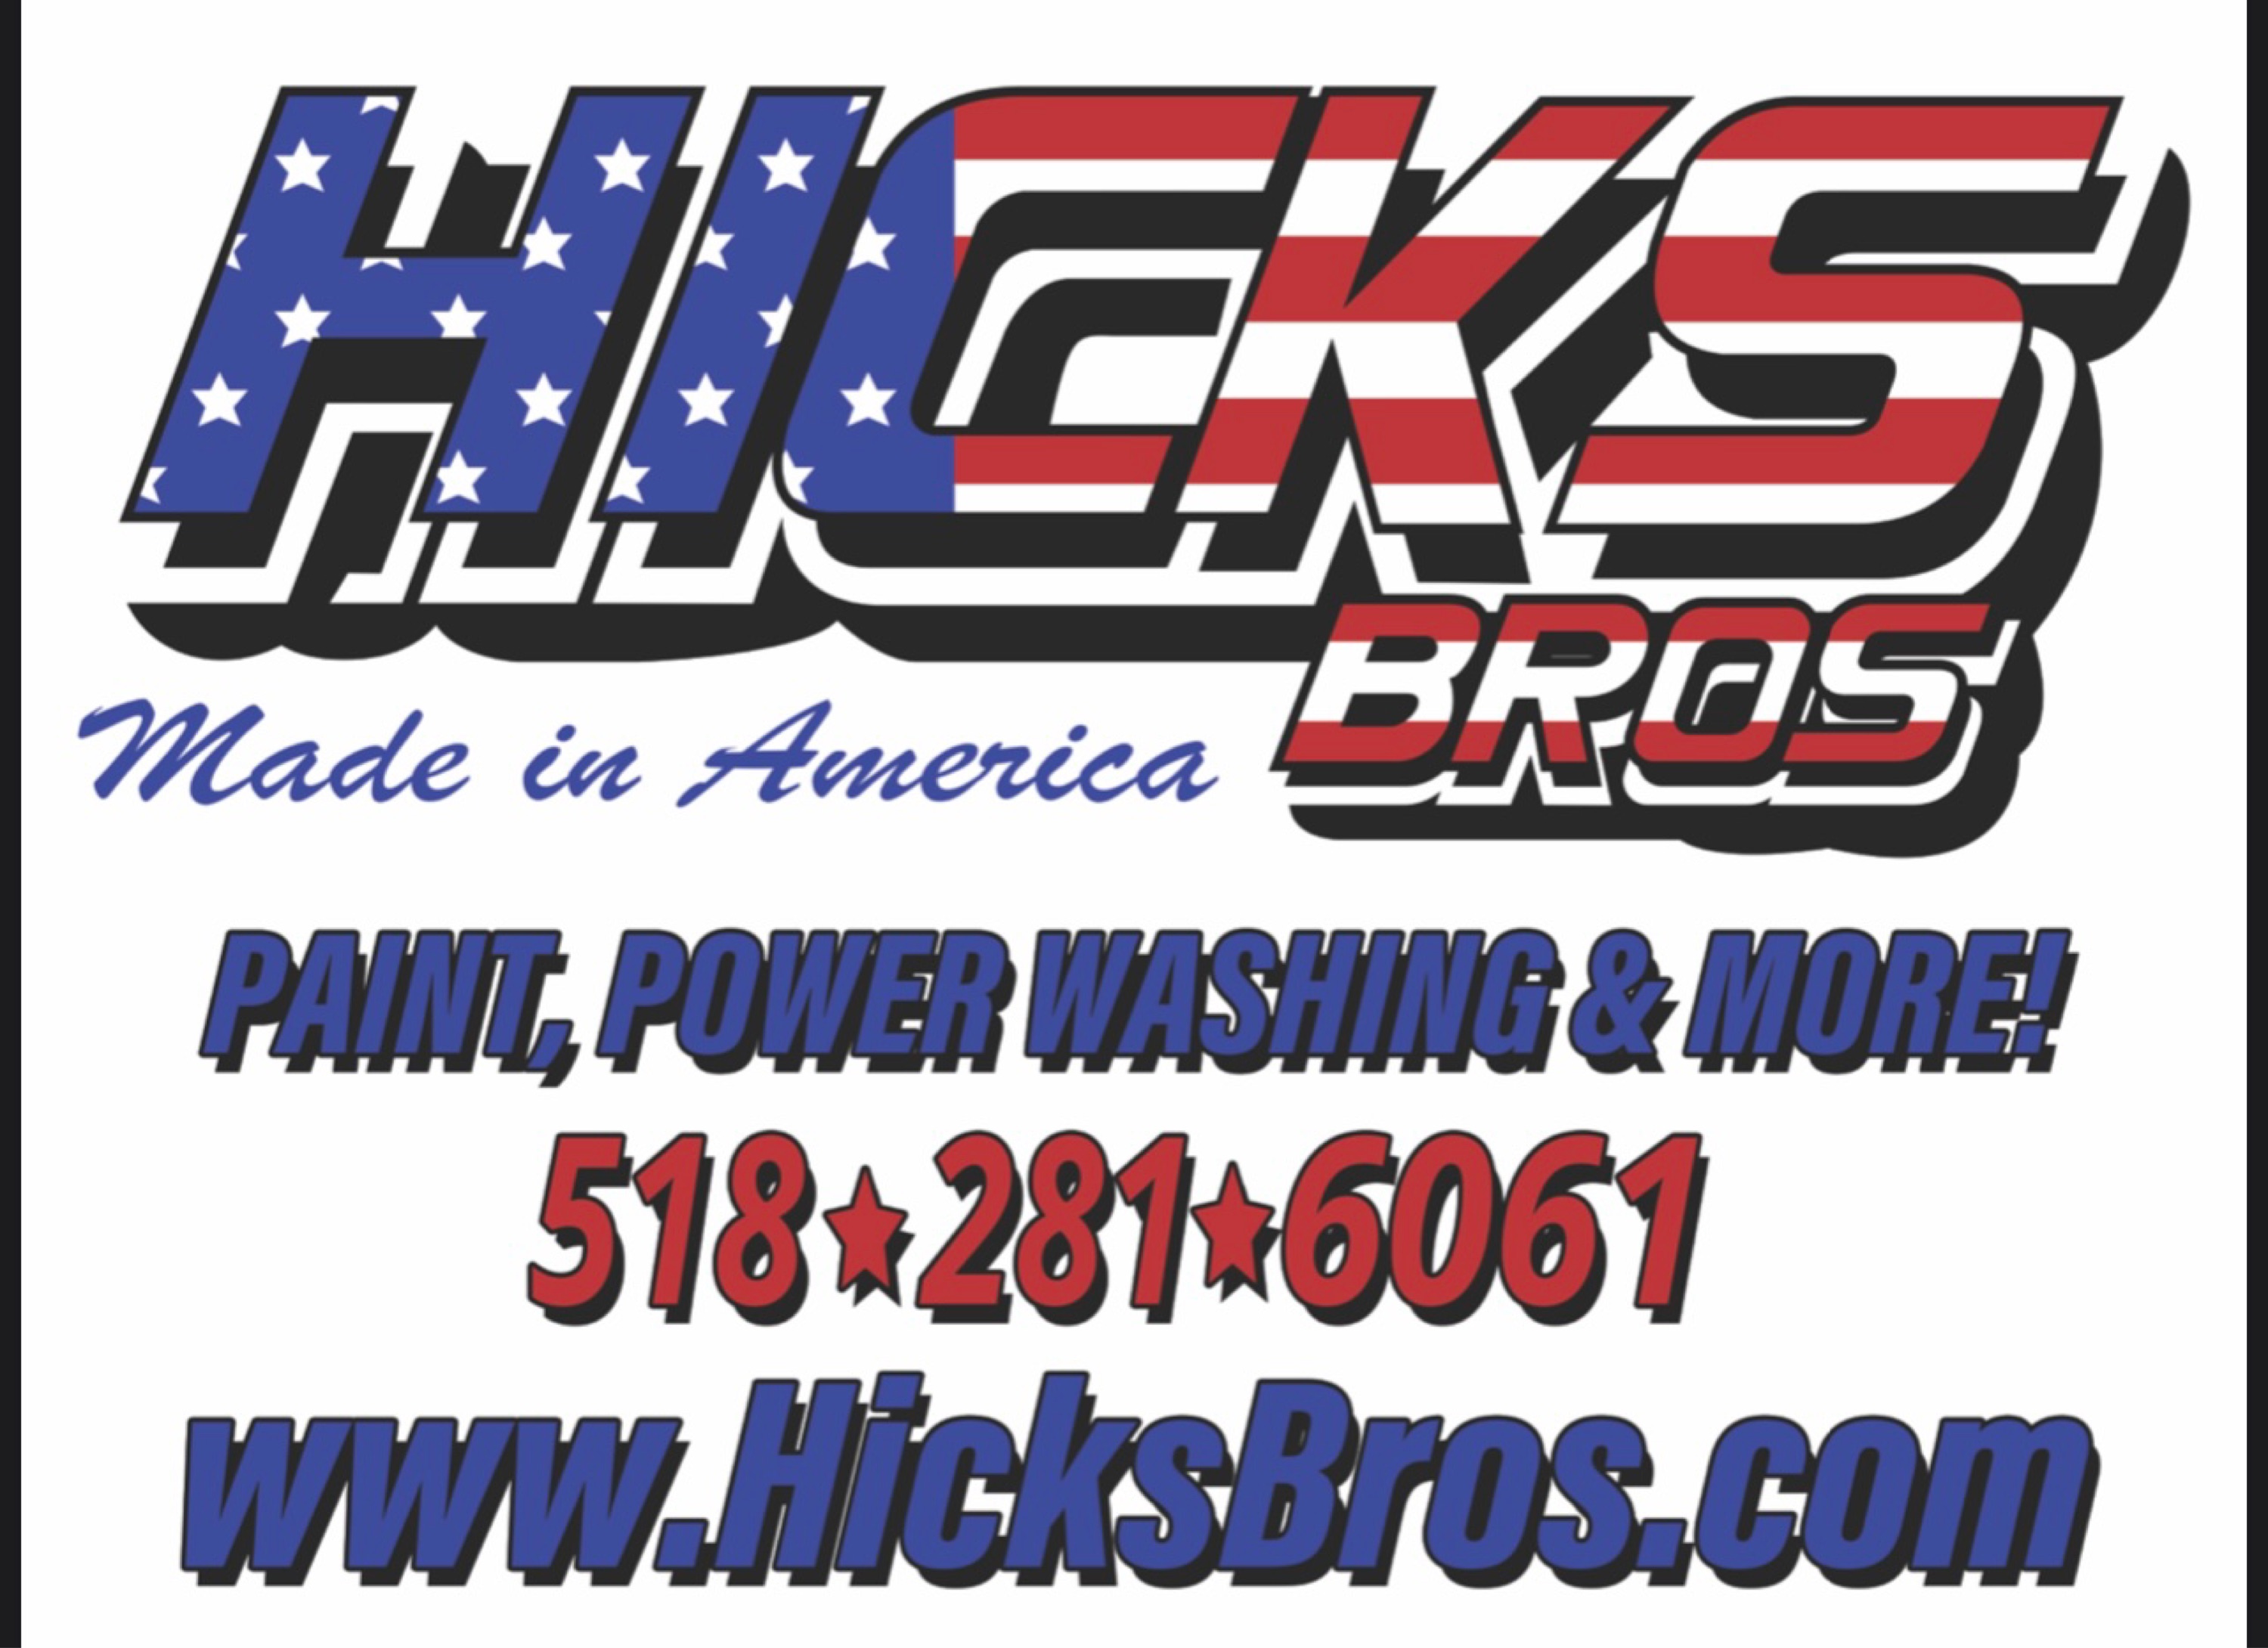 Hicks Bros. Contracting Logo